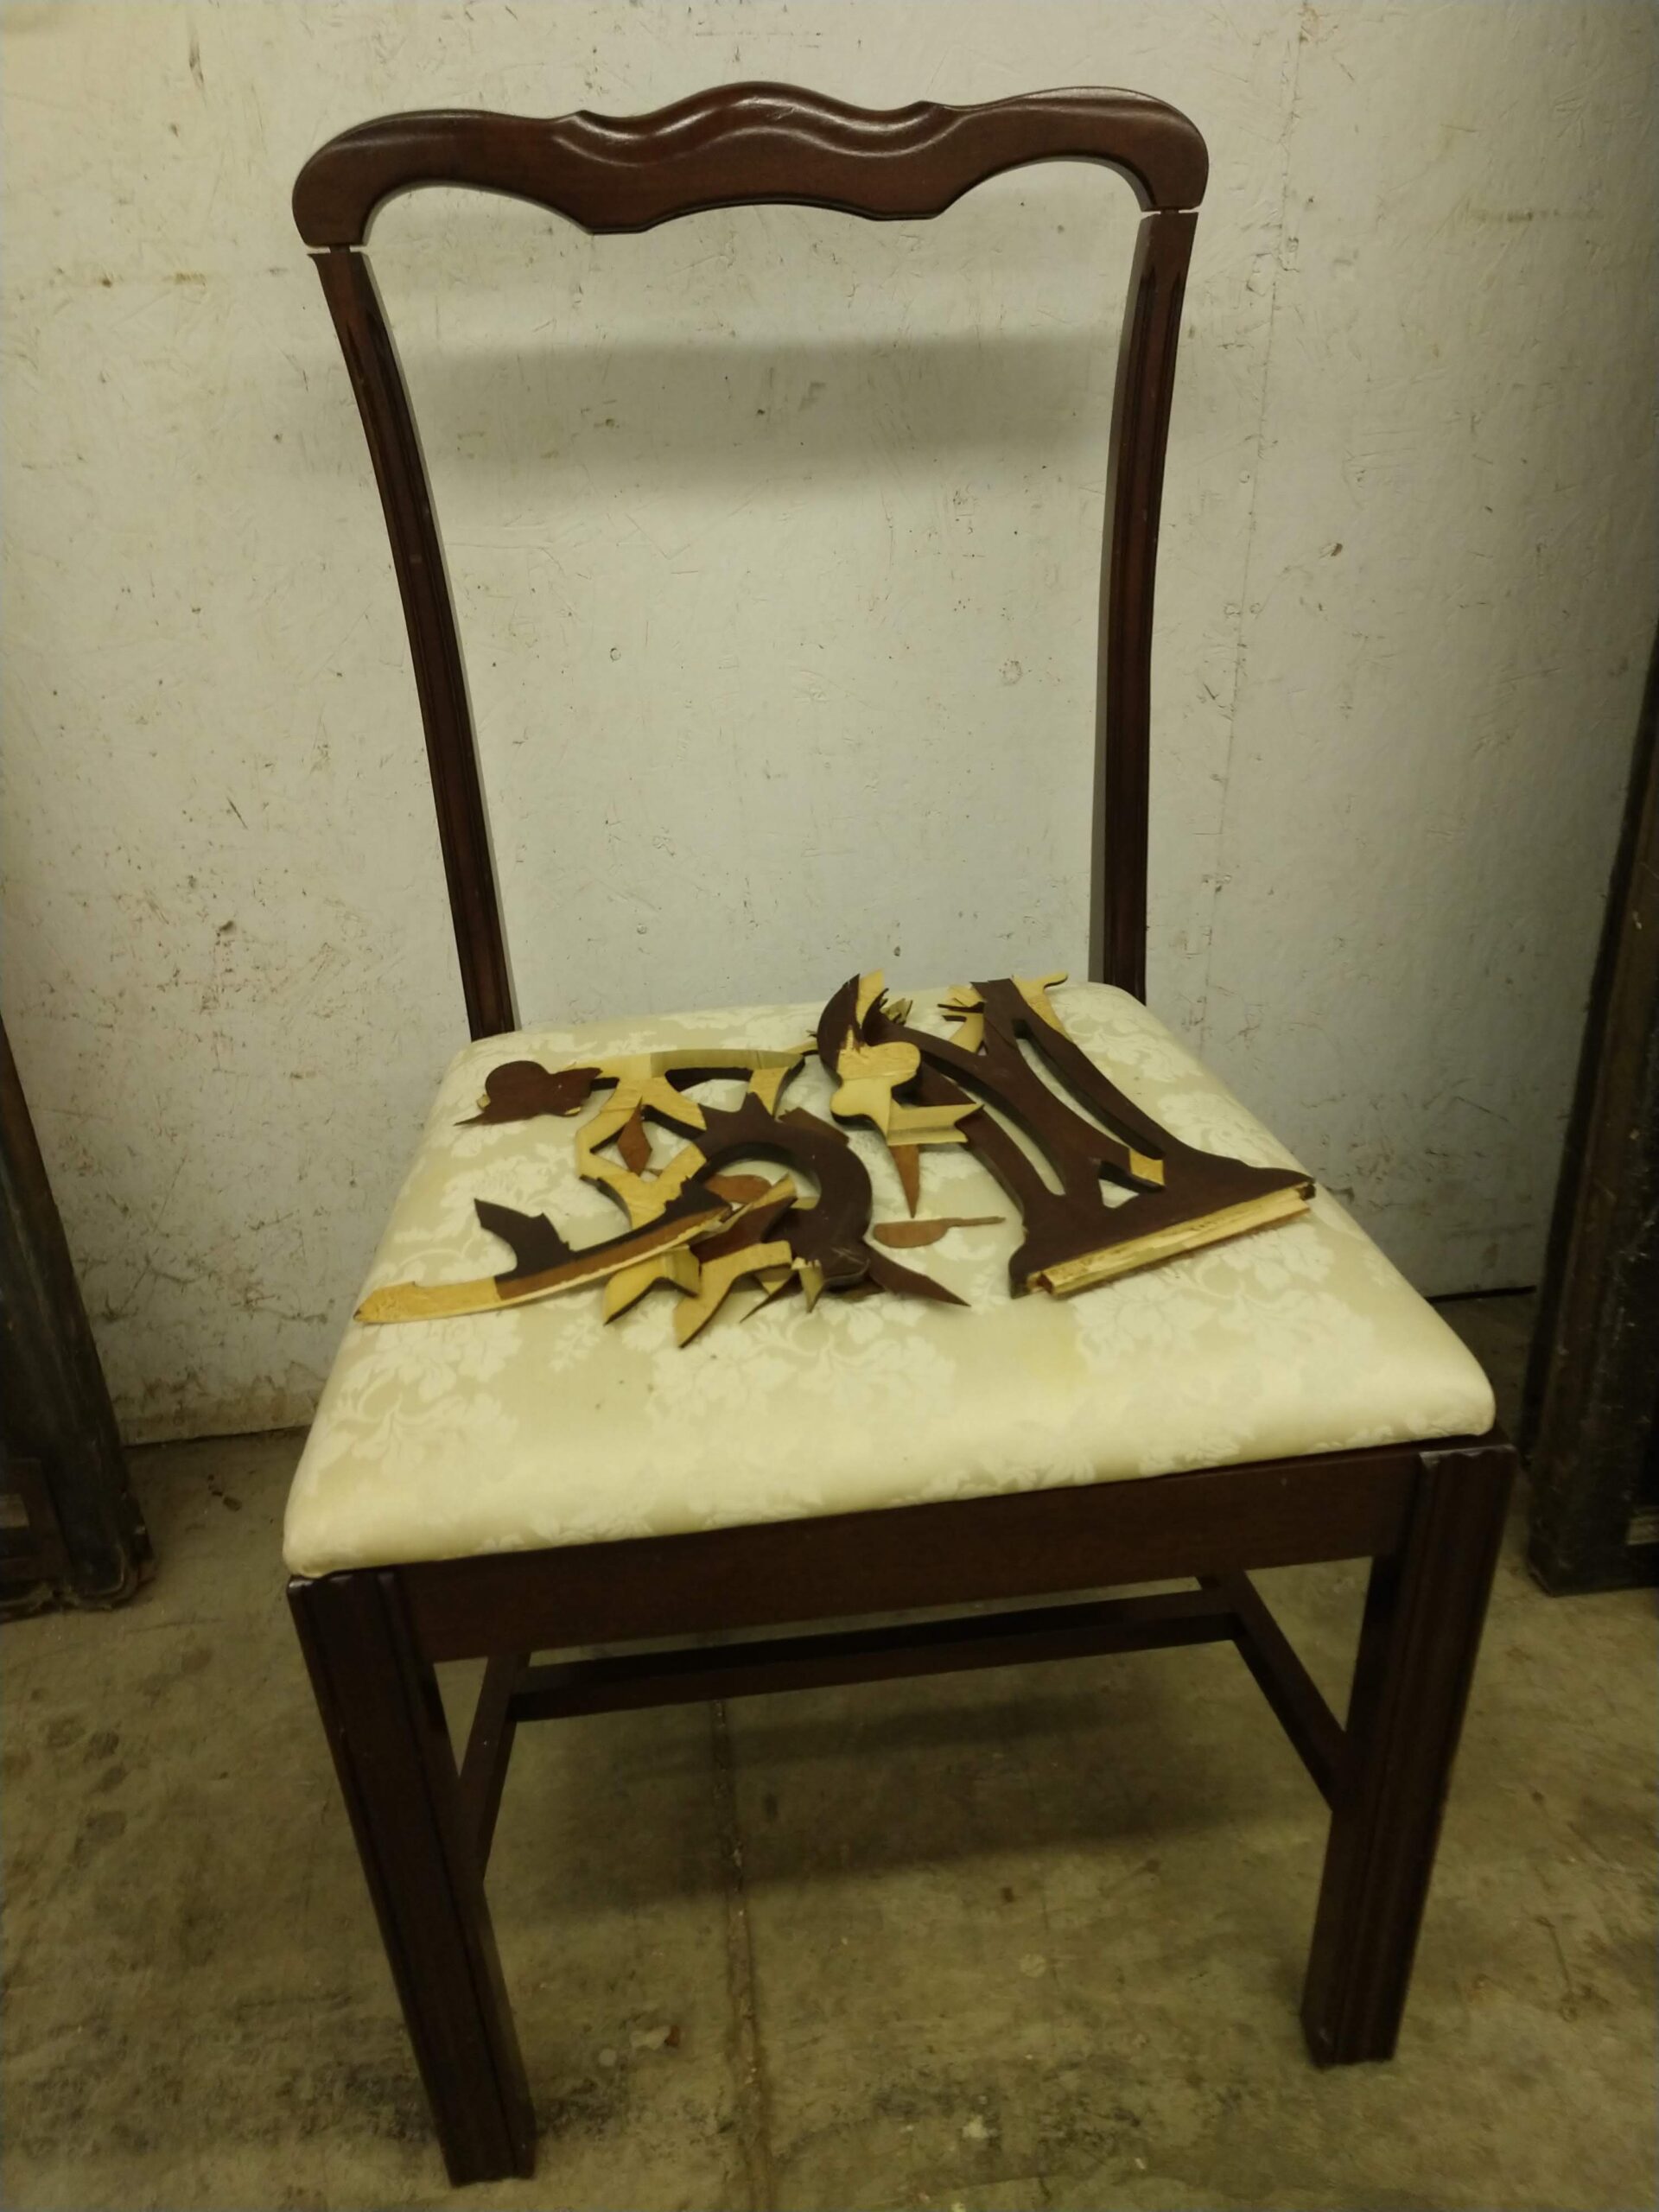 Chippendale chair repair